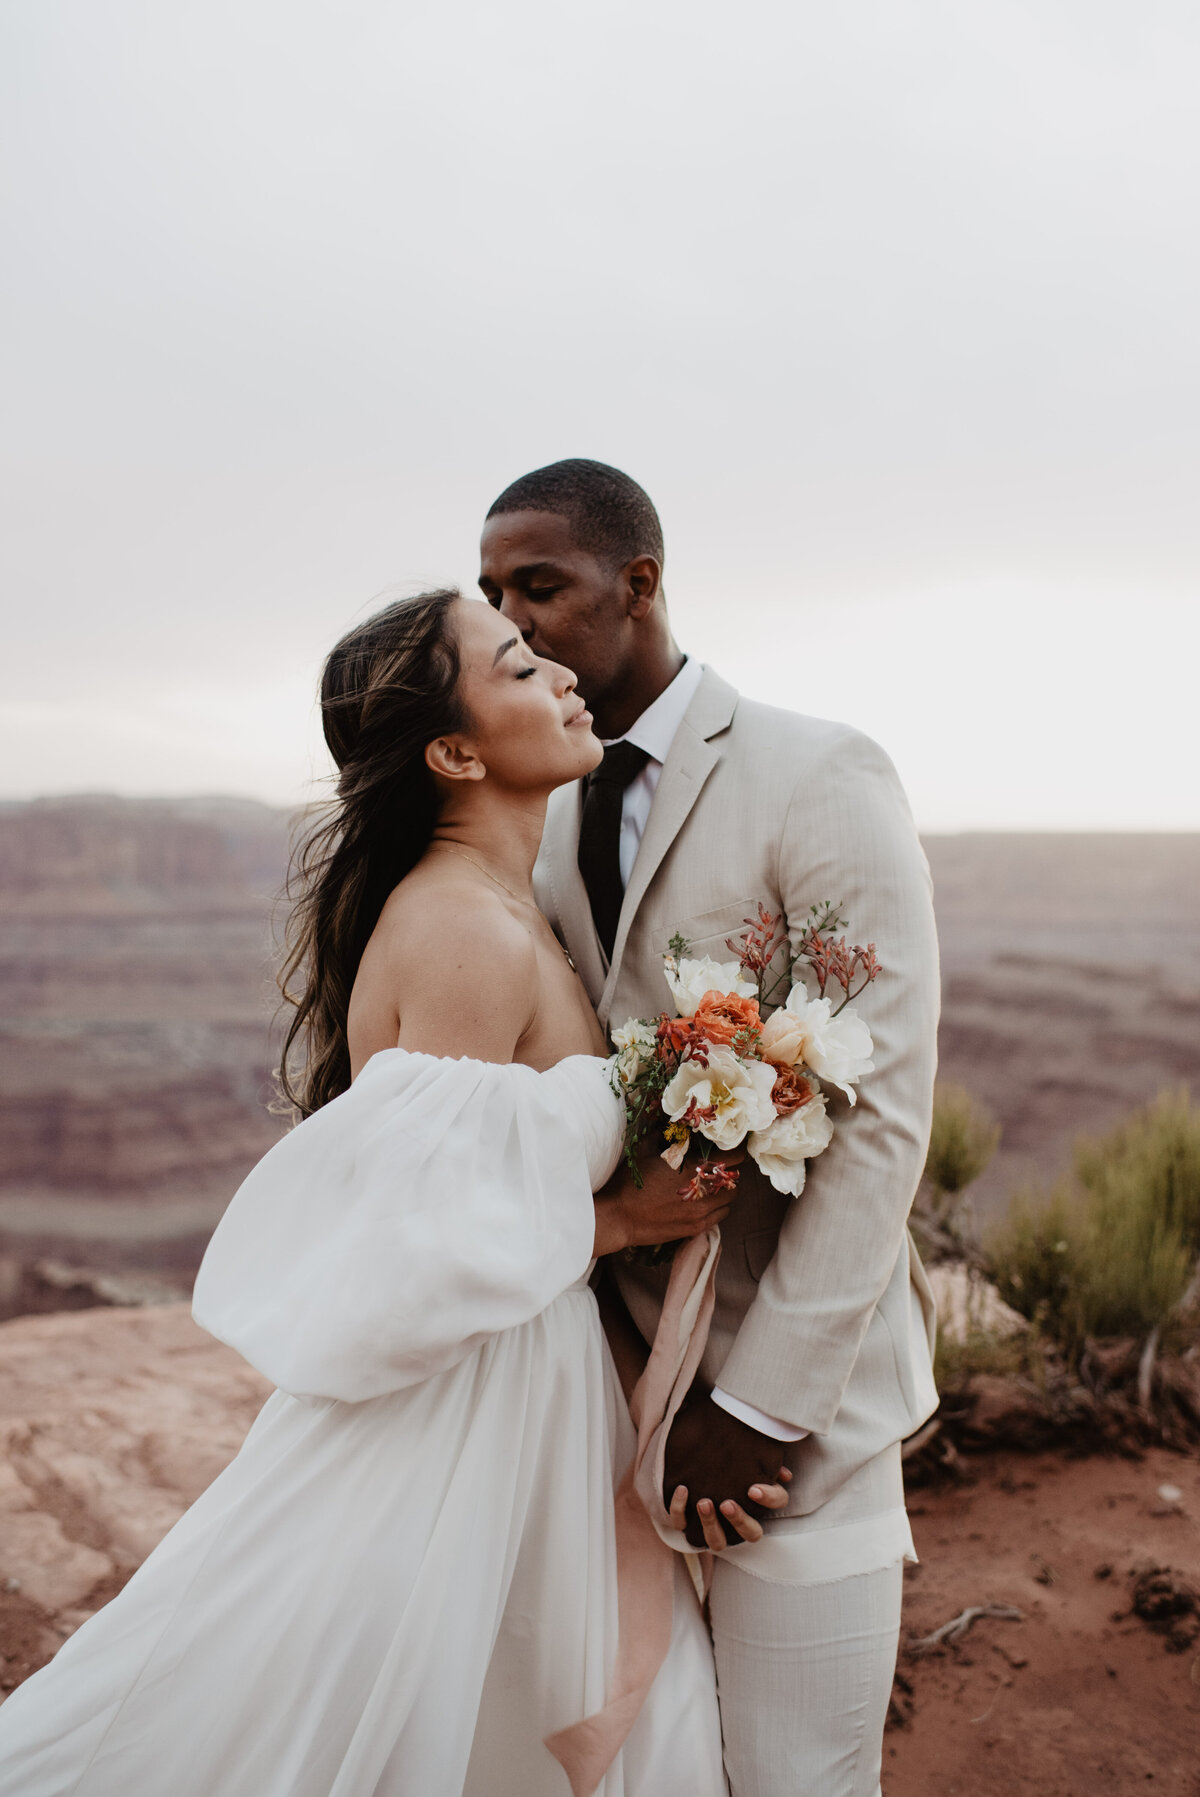 Utah Elopement Photographer captures groom kissing bride during golden hour portraits